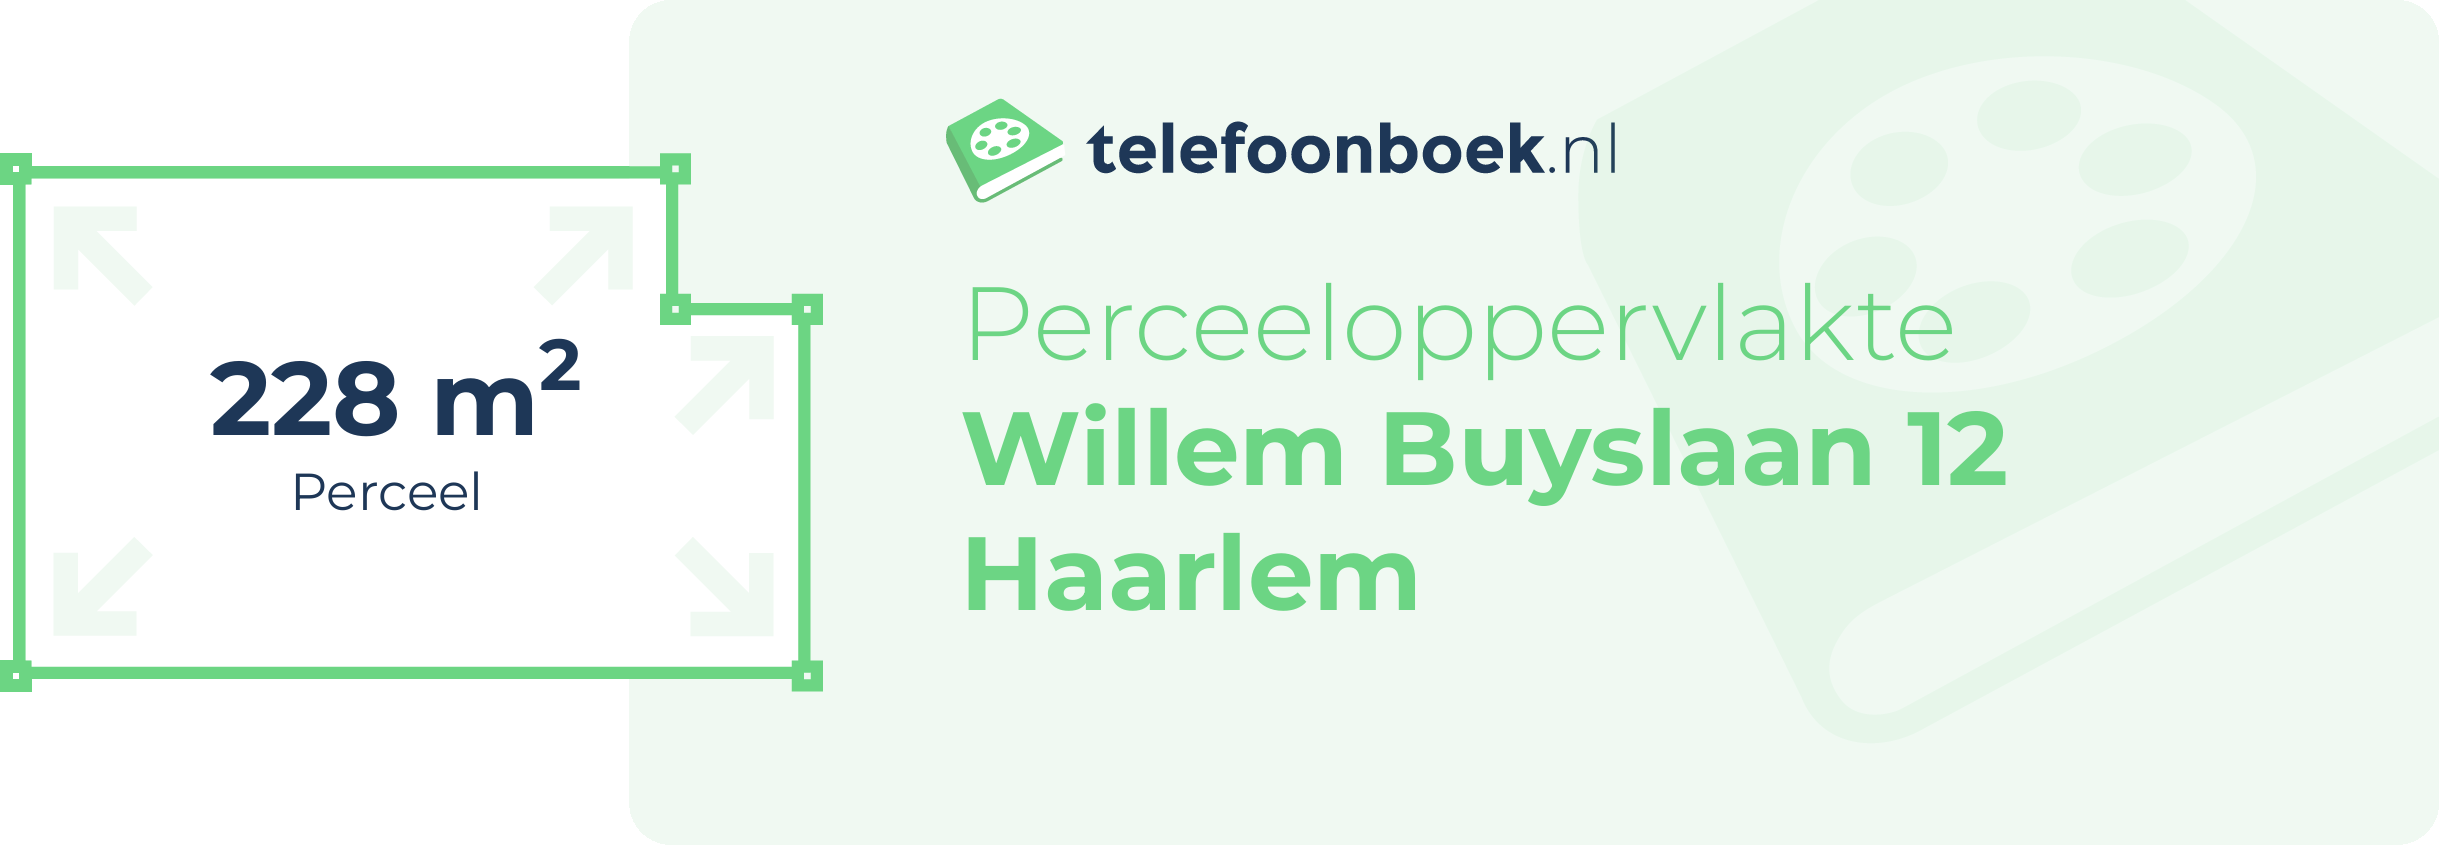 Perceeloppervlakte Willem Buyslaan 12 Haarlem